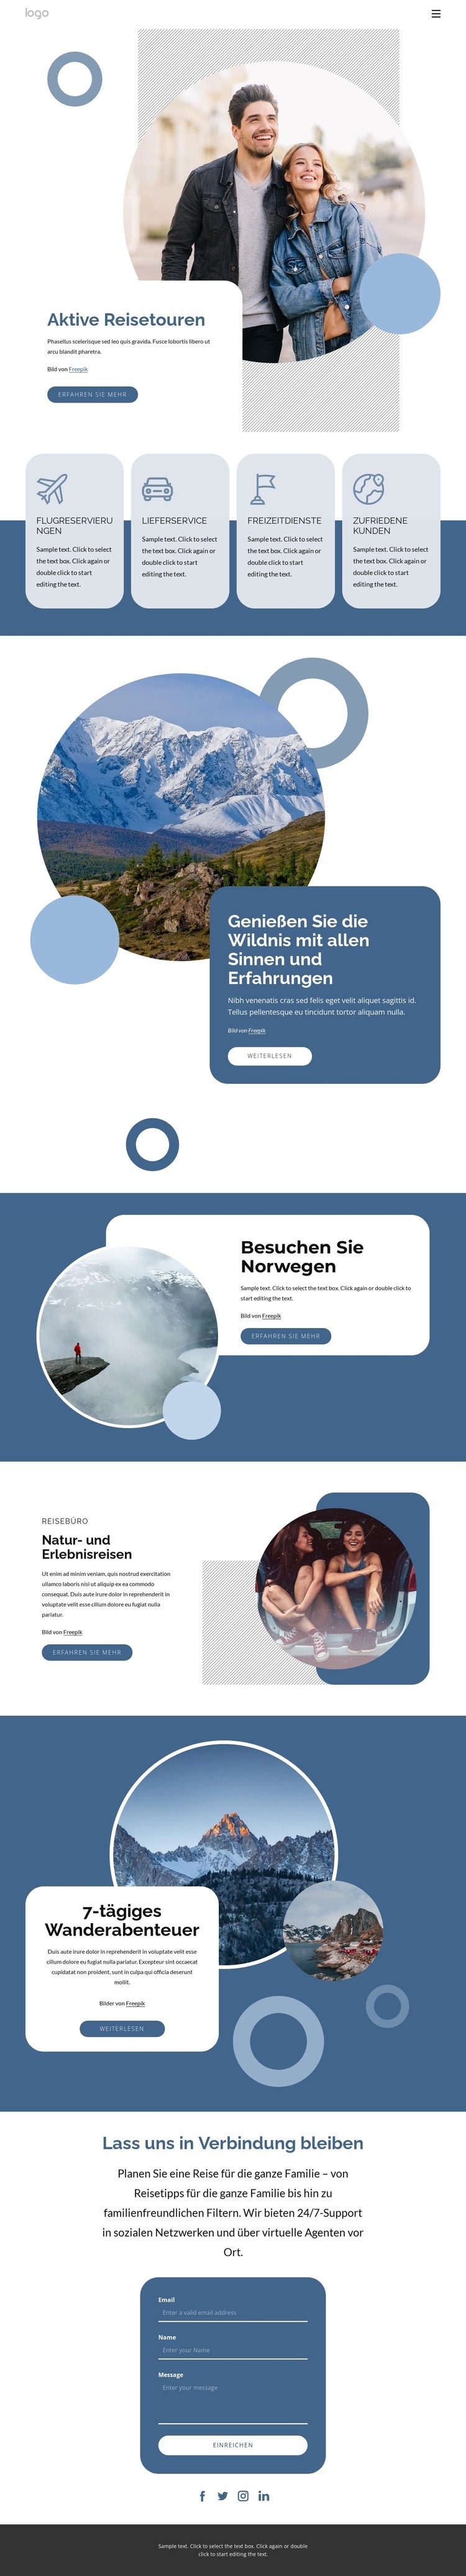 Aktive Reisetouren Website design